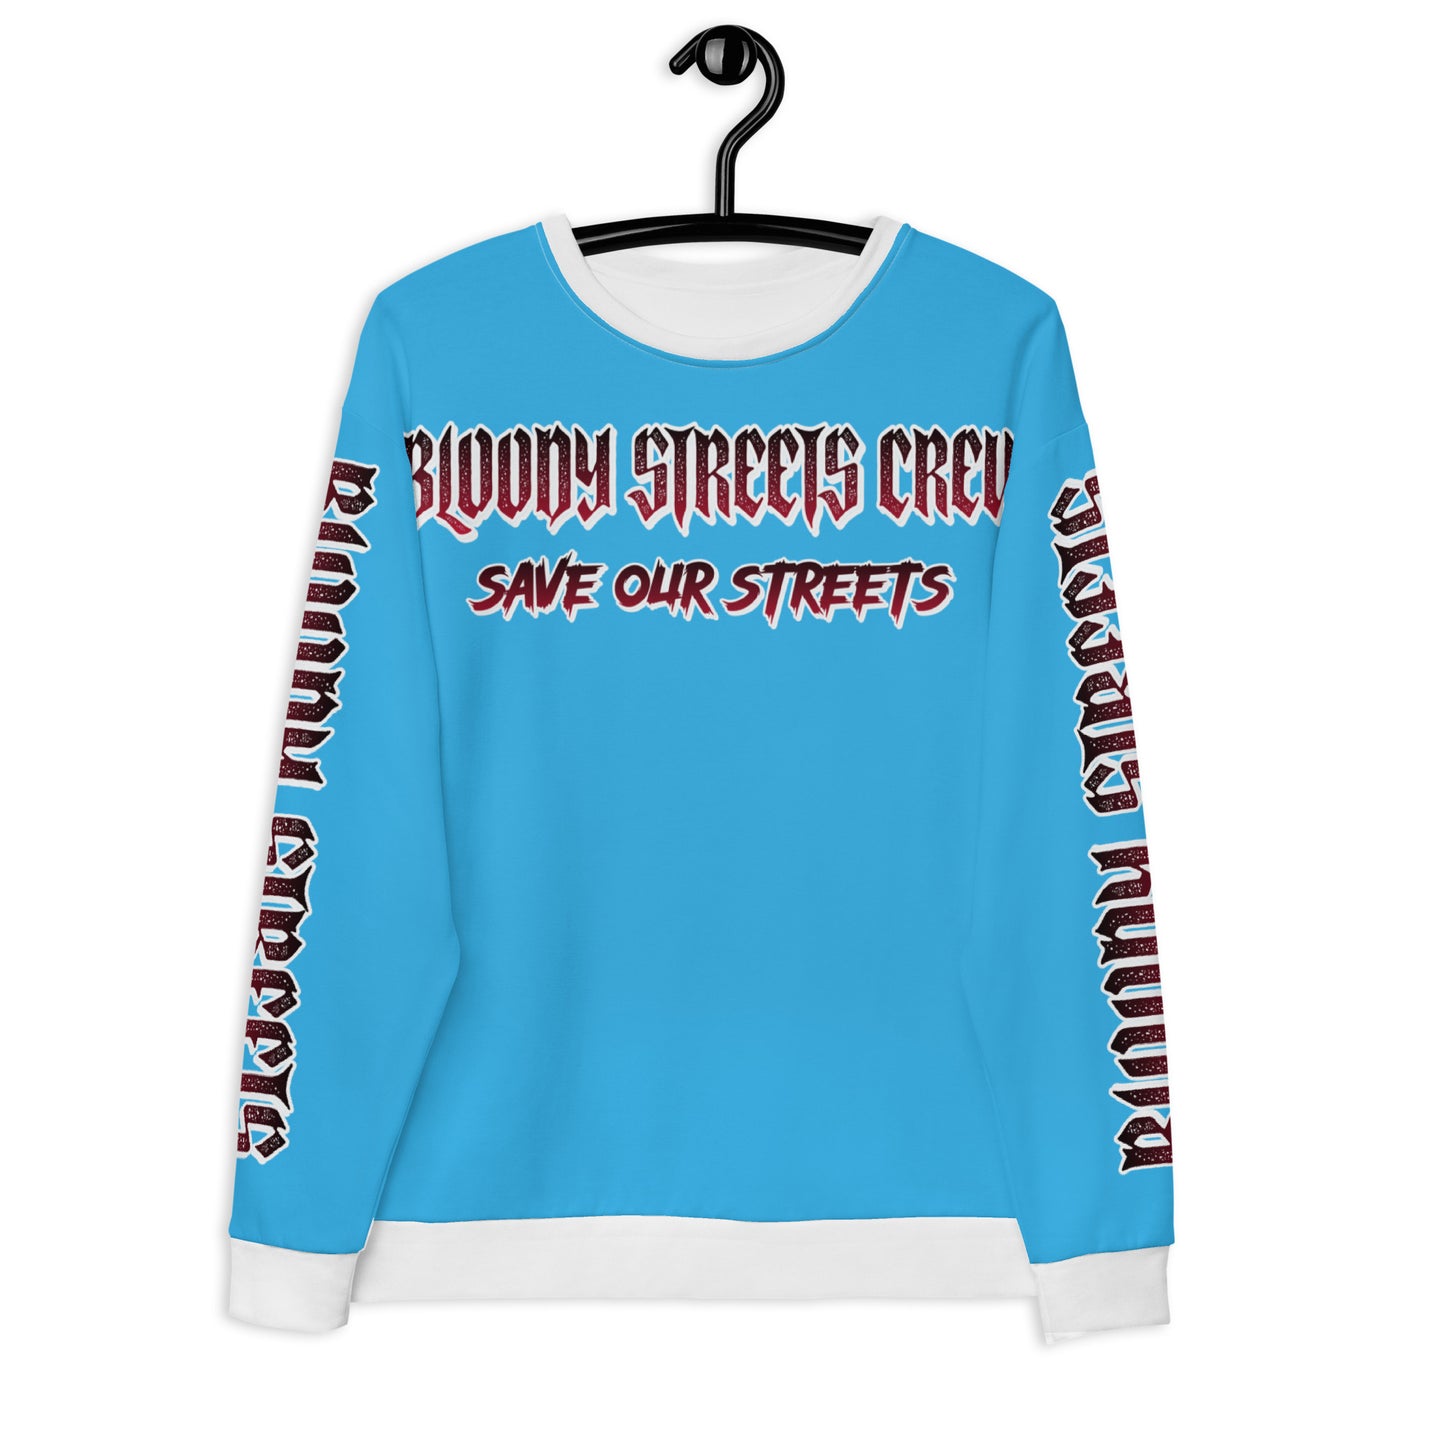 Bloody Streets Crew Member Streetwear Pullover Blue - BLOODY-STREETS.DE Streetwear Herren und Damen Hoodies, T-Shirts, Pullis